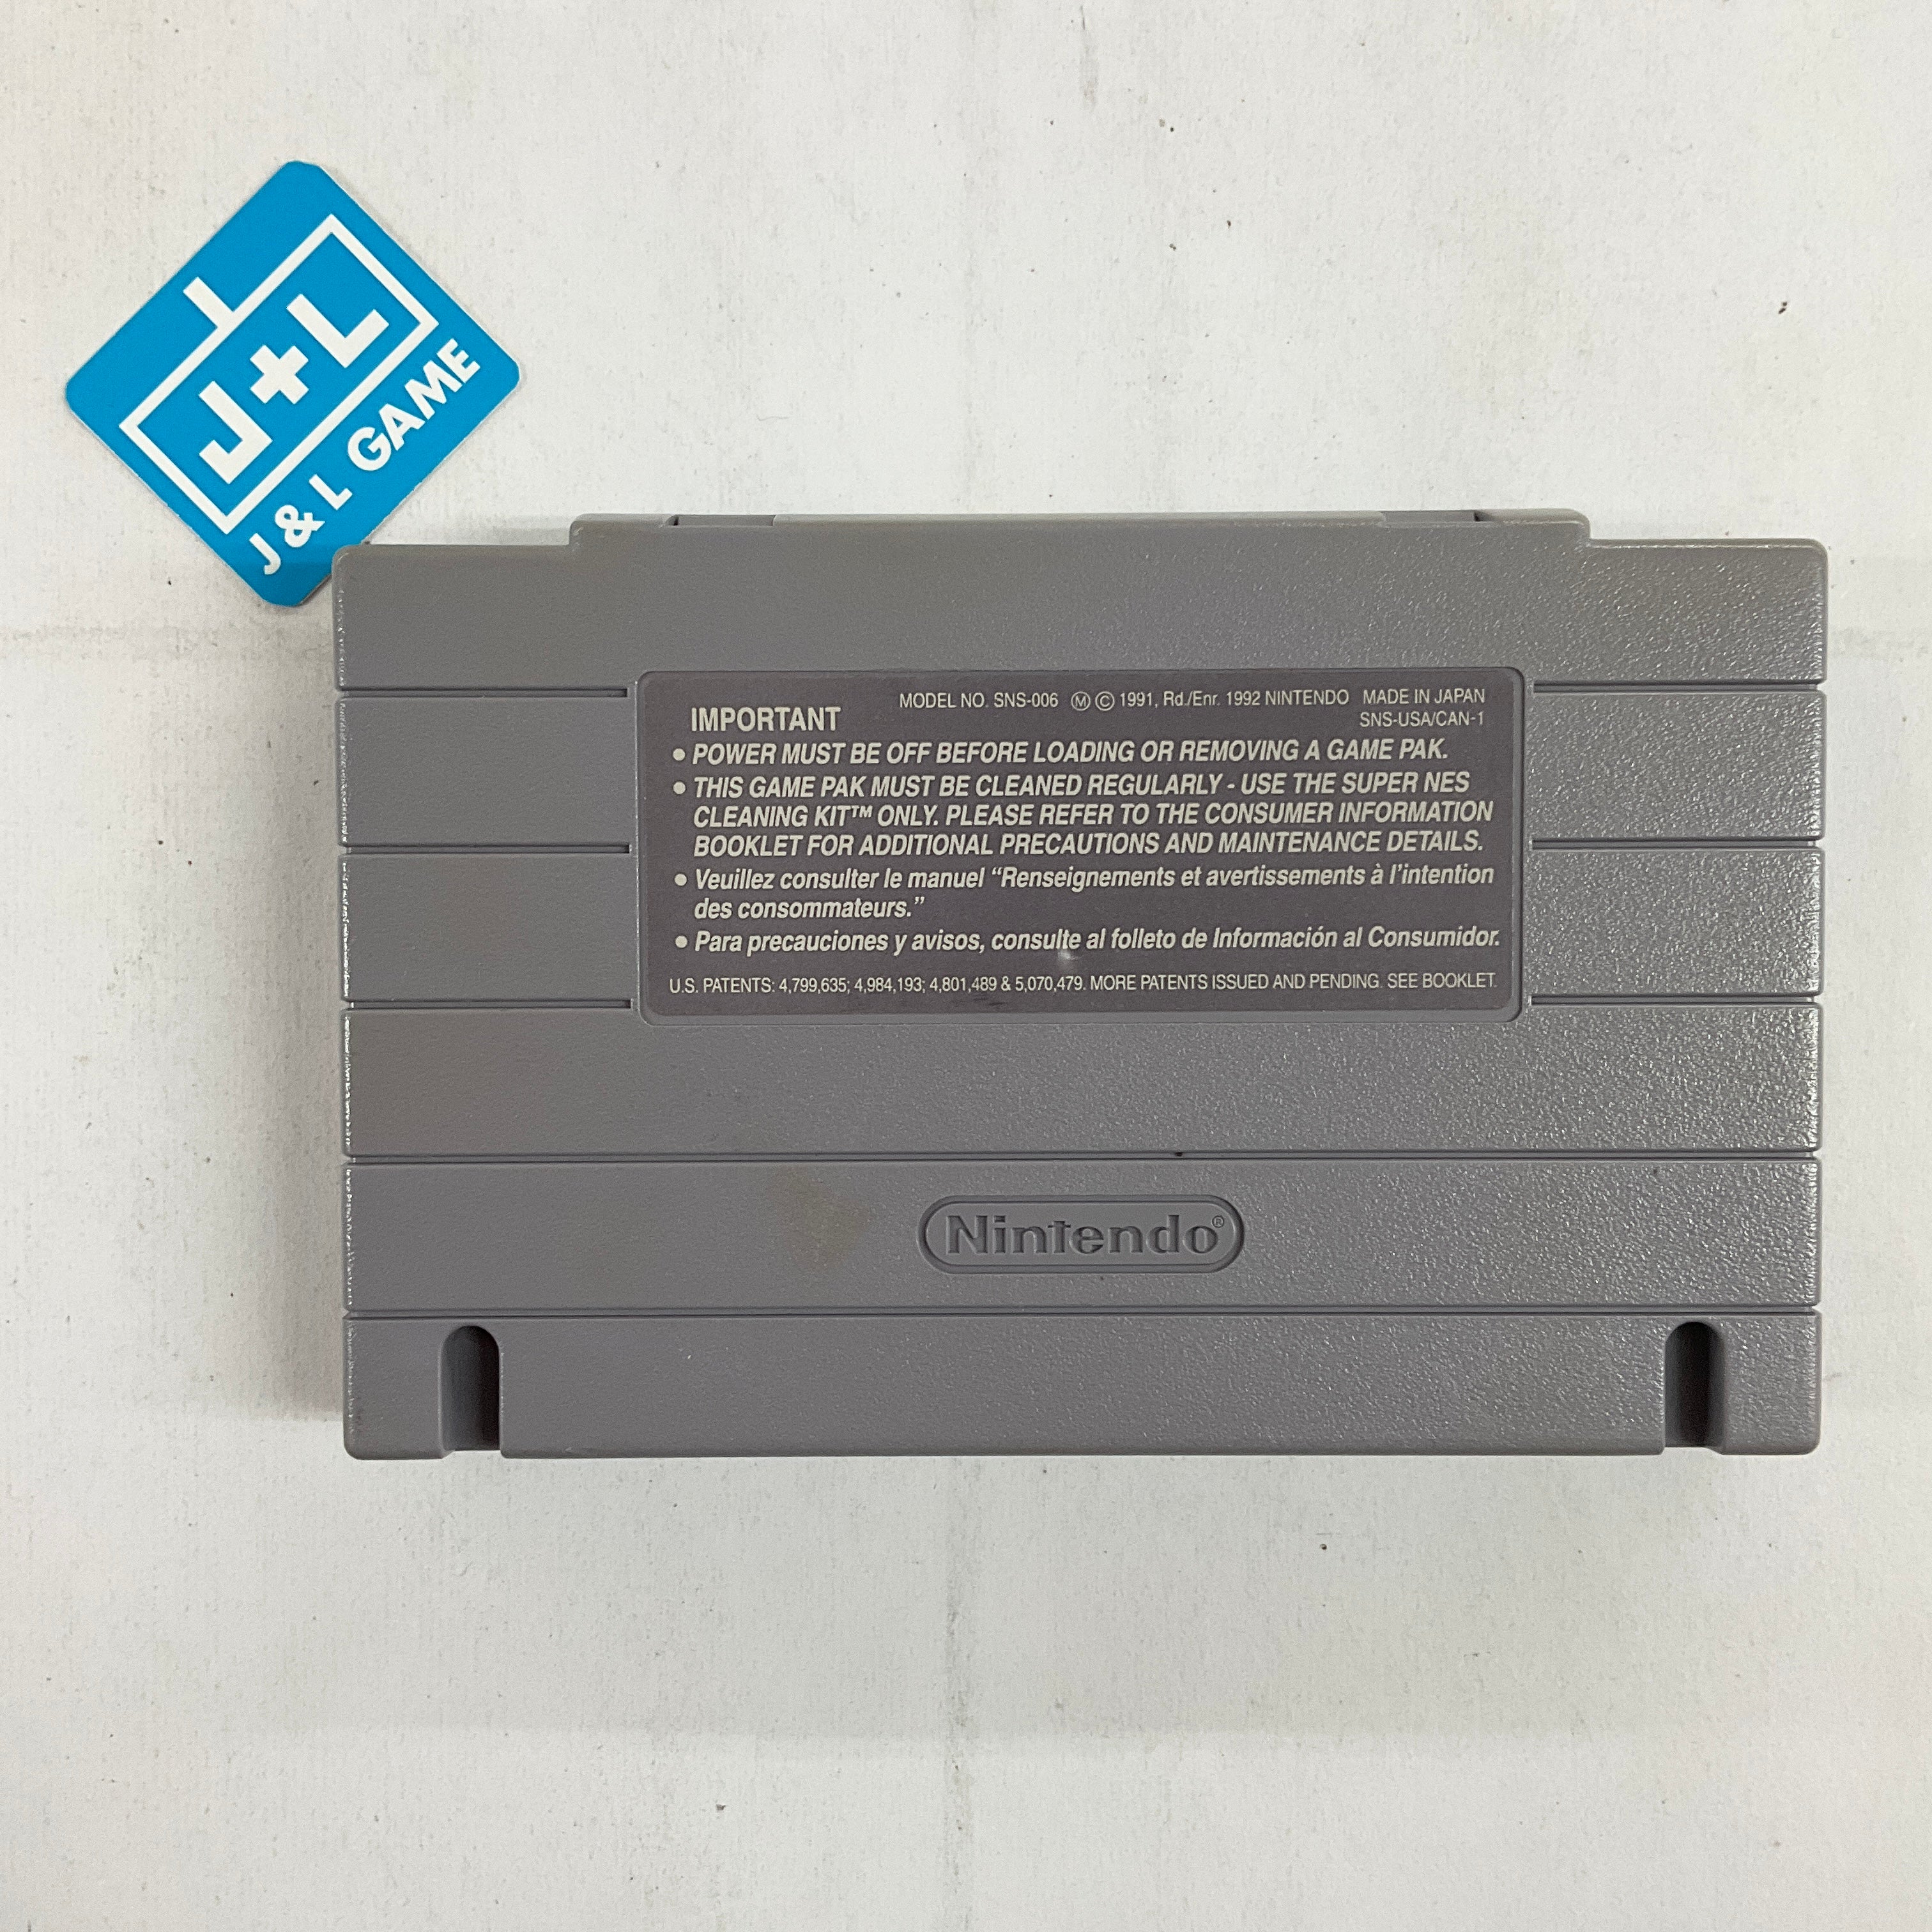 Star Fox - (SNES) Super Nintendo [Pre-Owned] Video Games Nintendo   